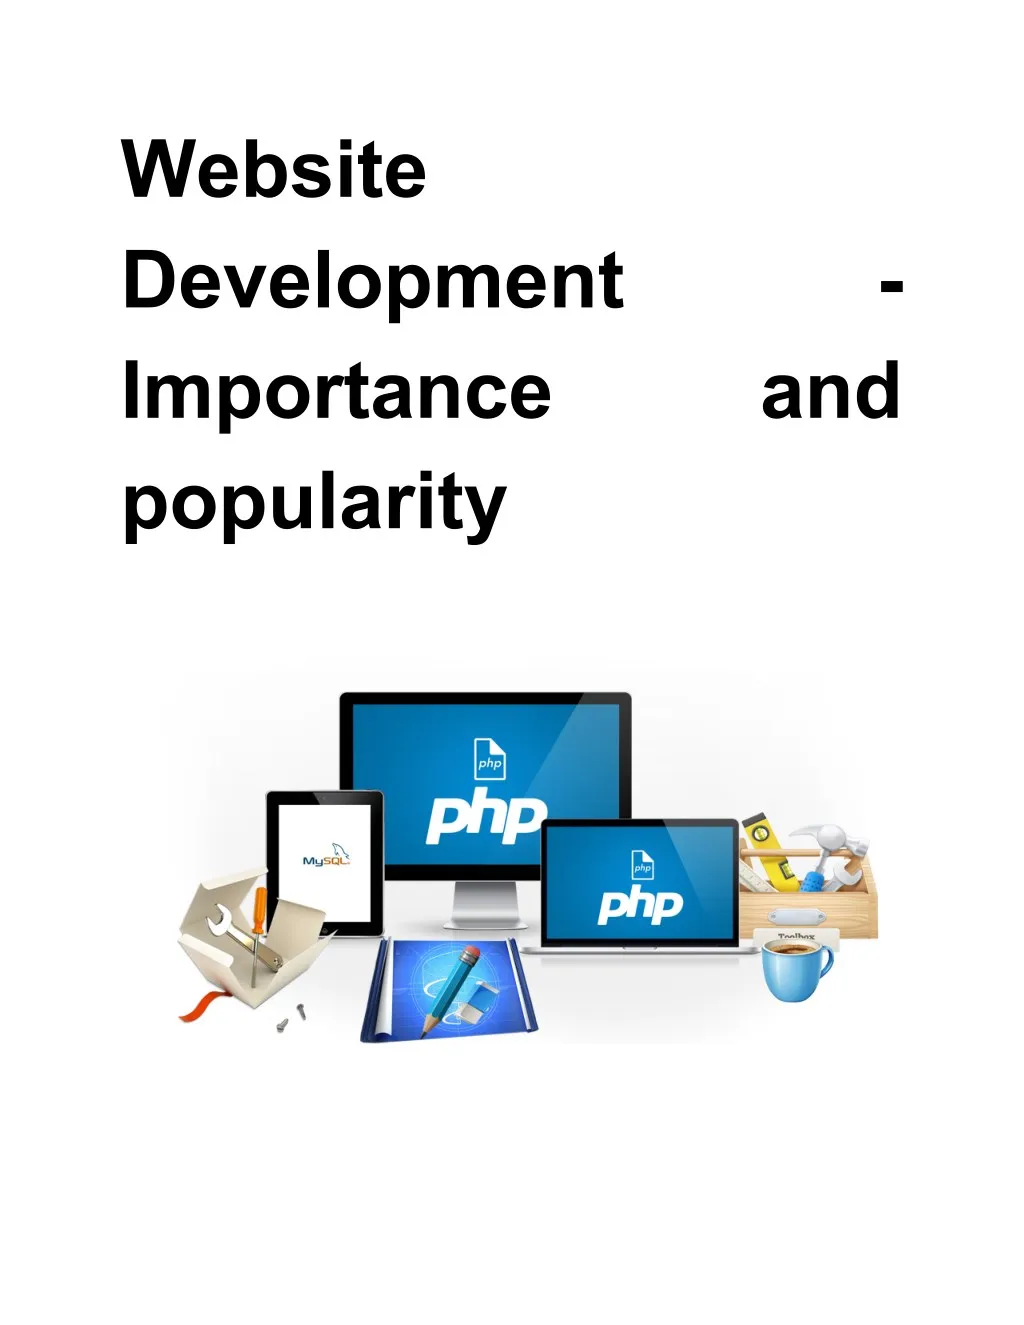 website development importance popularity